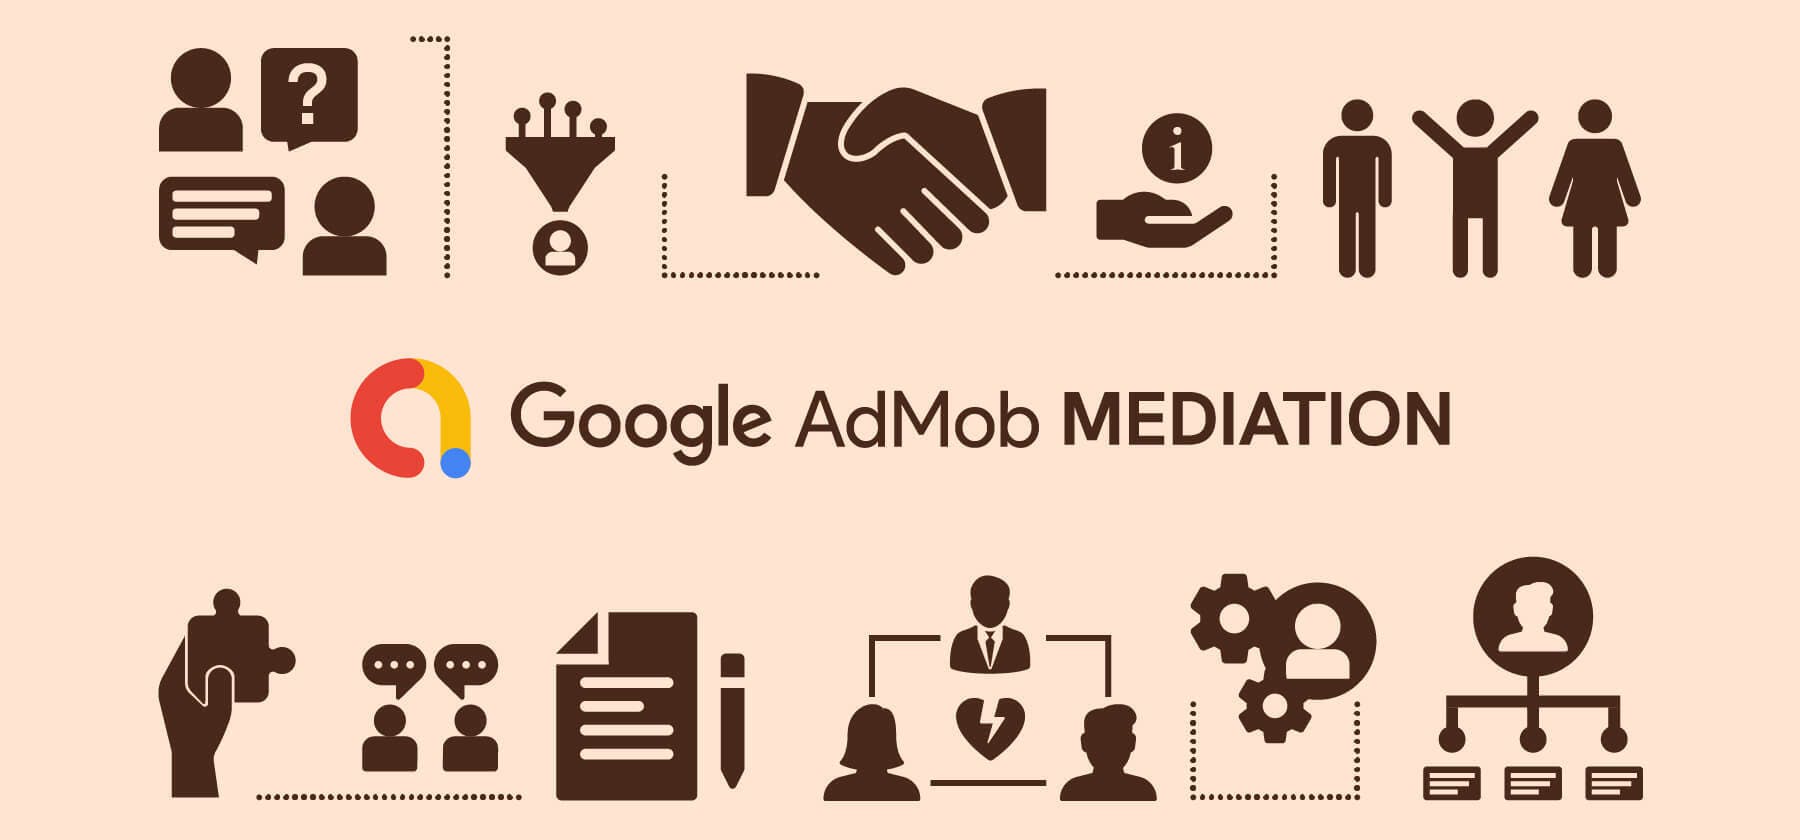 Google AdMob Mediation